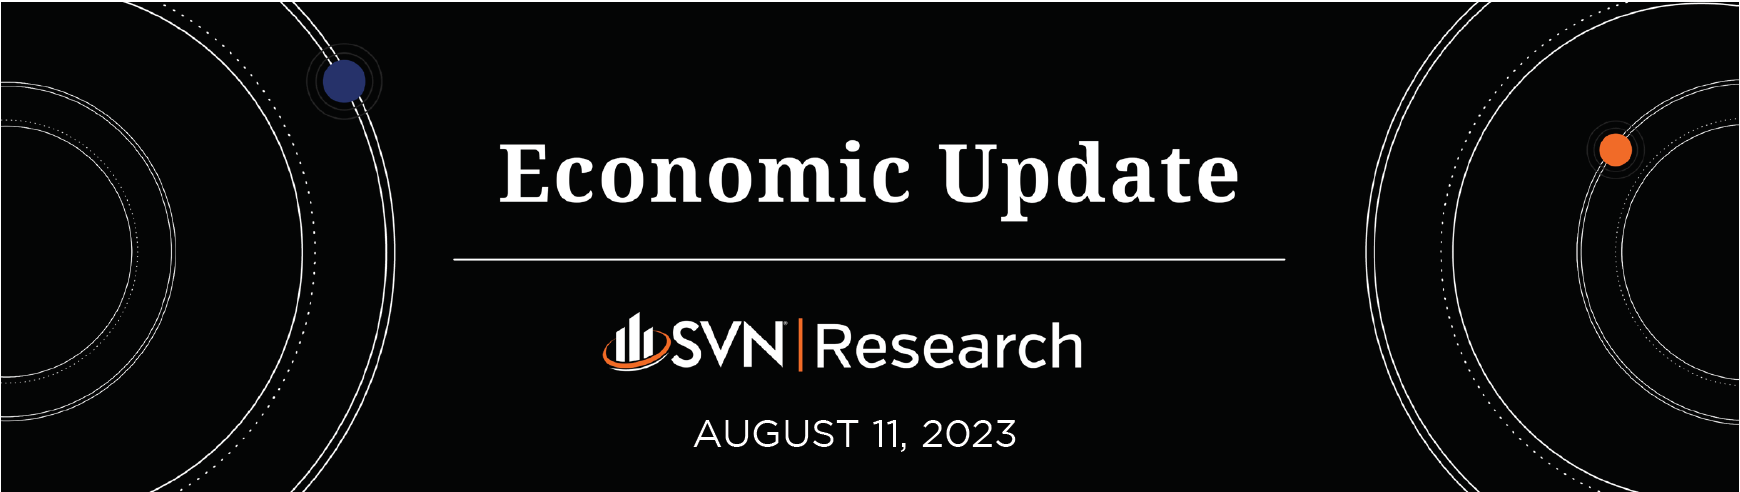 SVN | Research Economic Update 08.11.2023